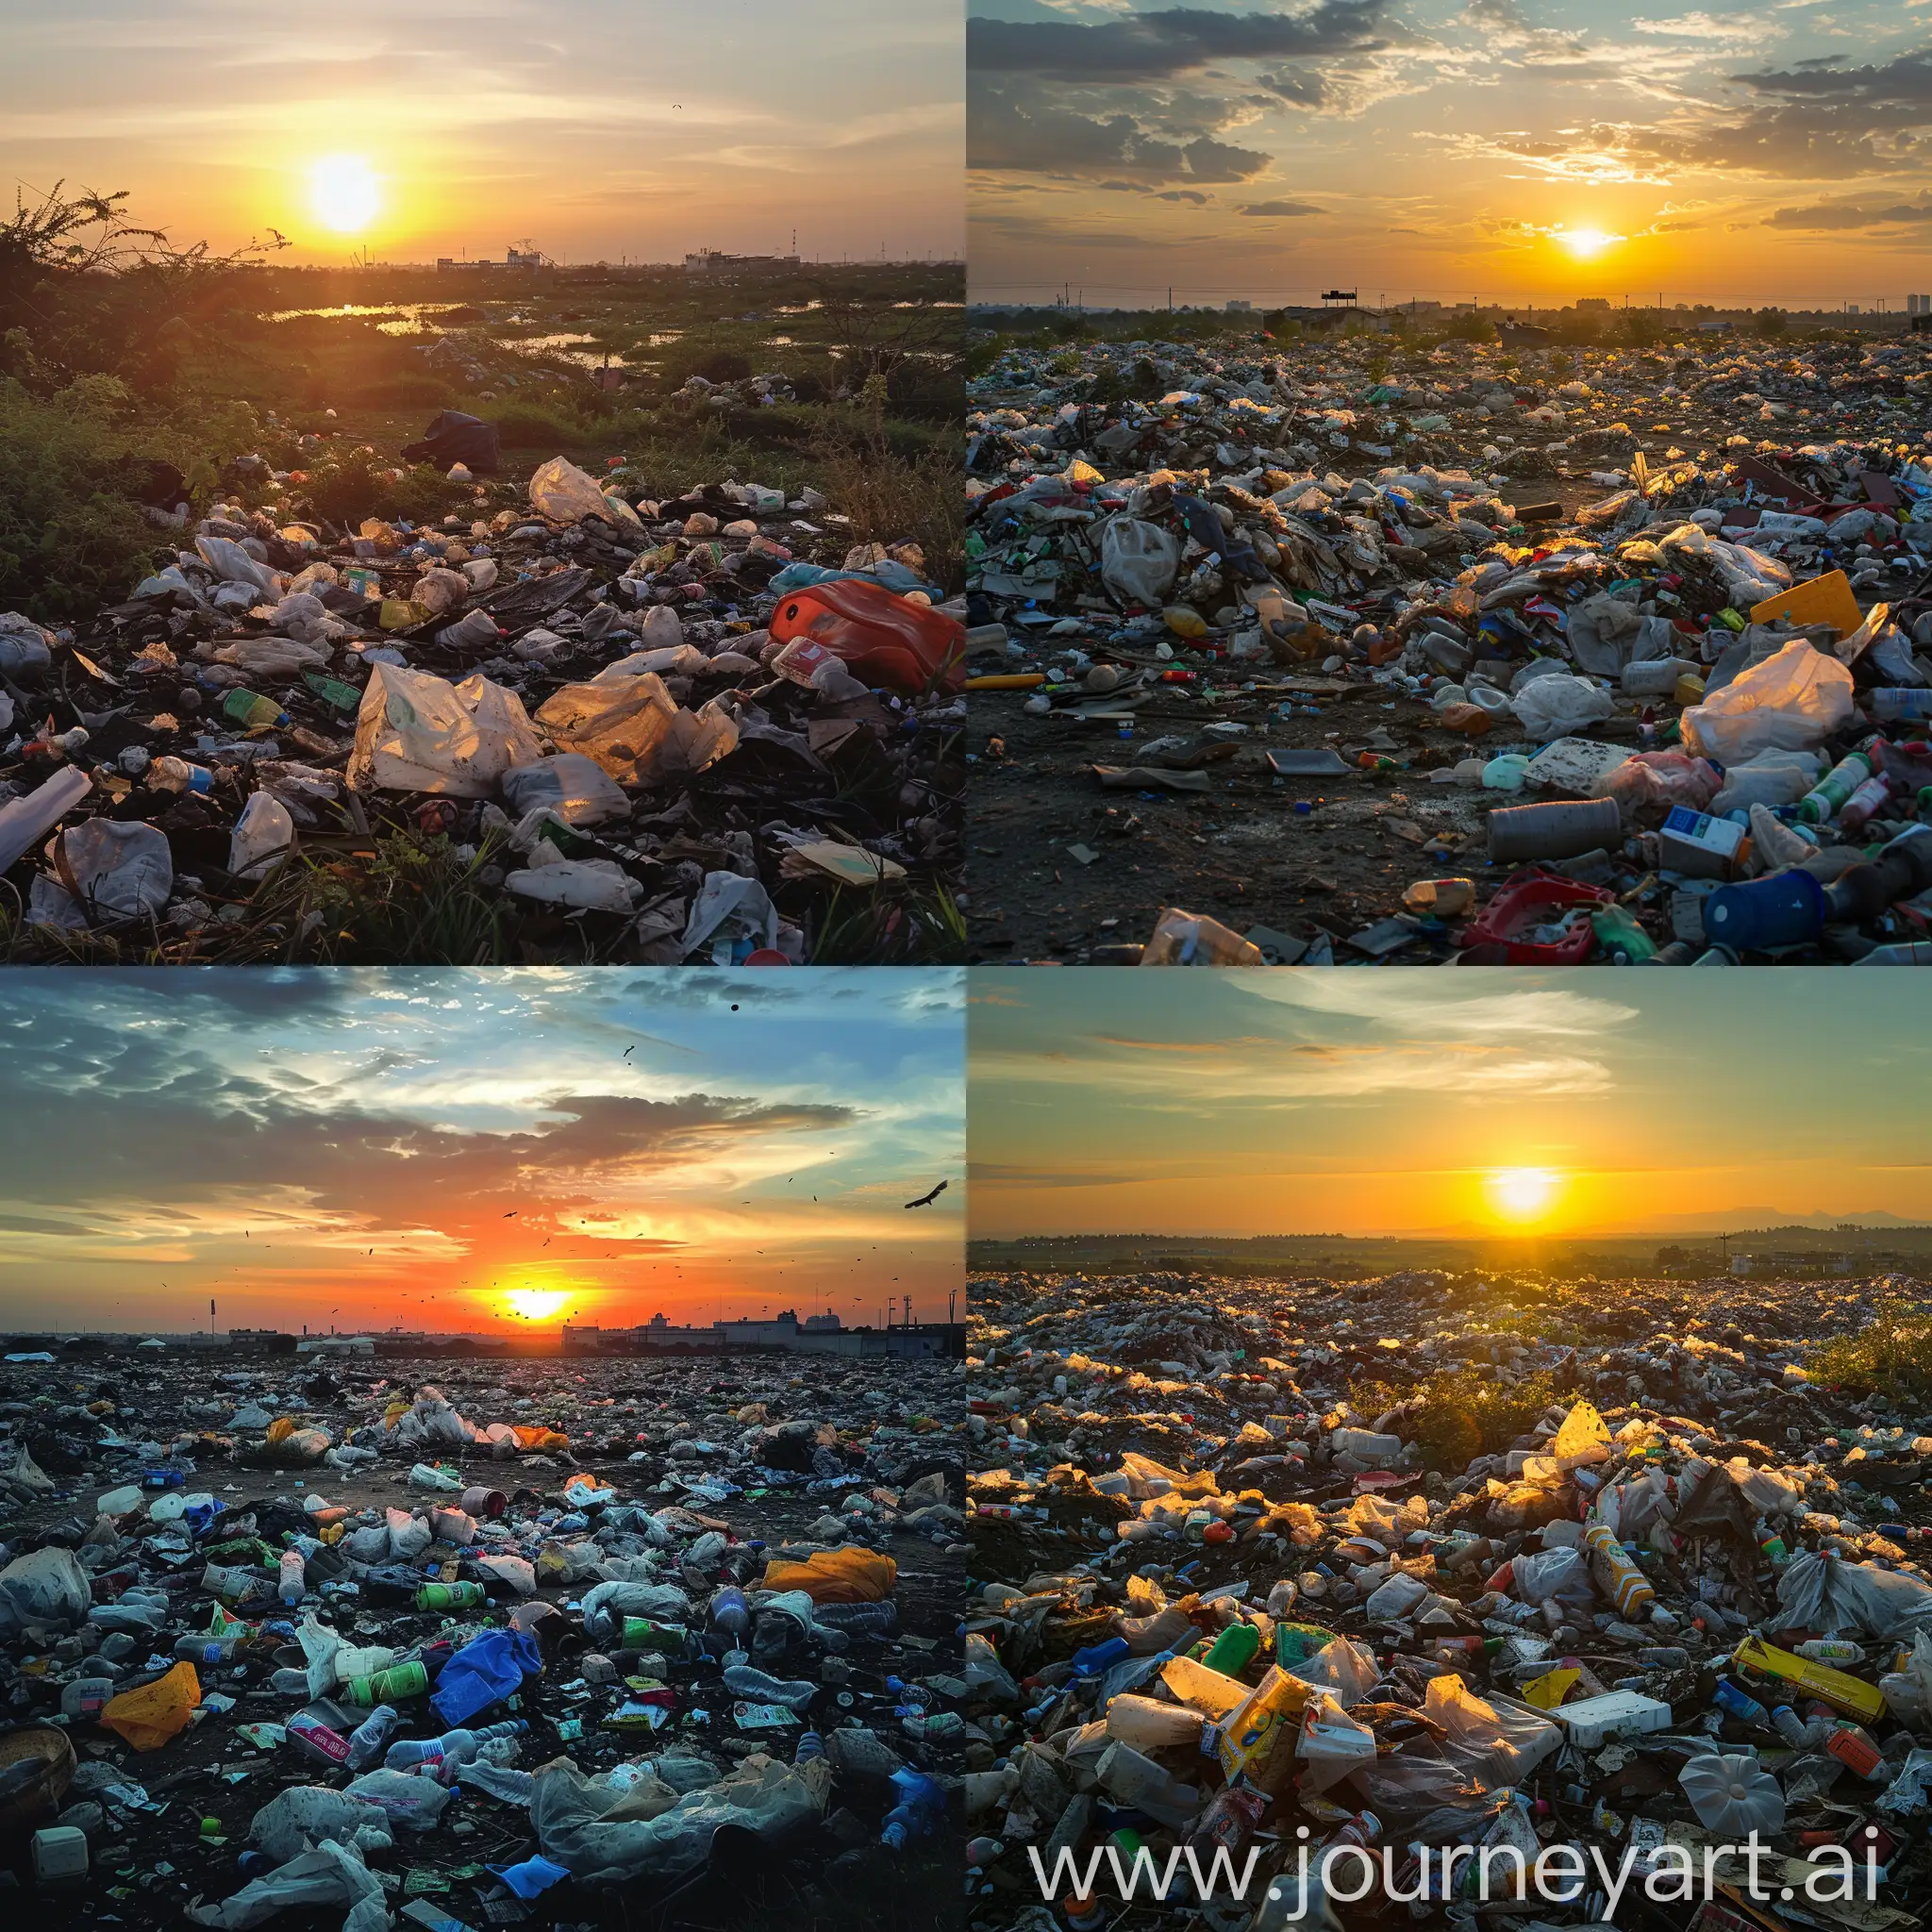 Urban-Waste-Management-at-Sunset